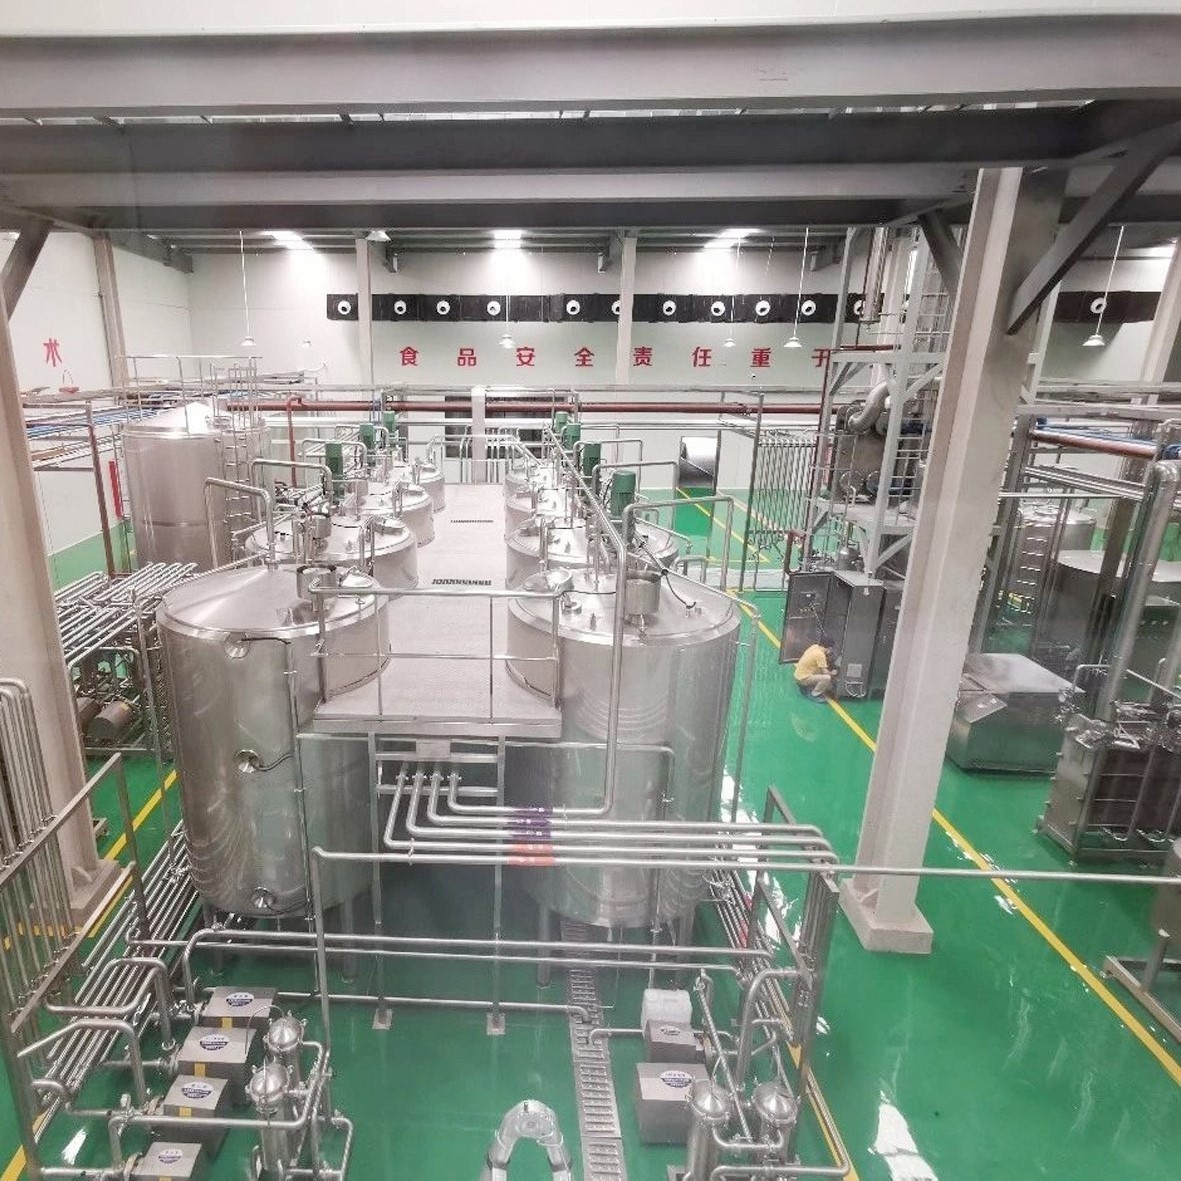 Quality 10000LPH Industrial Yogurt Making Machine Automatic Fermentation wholesale